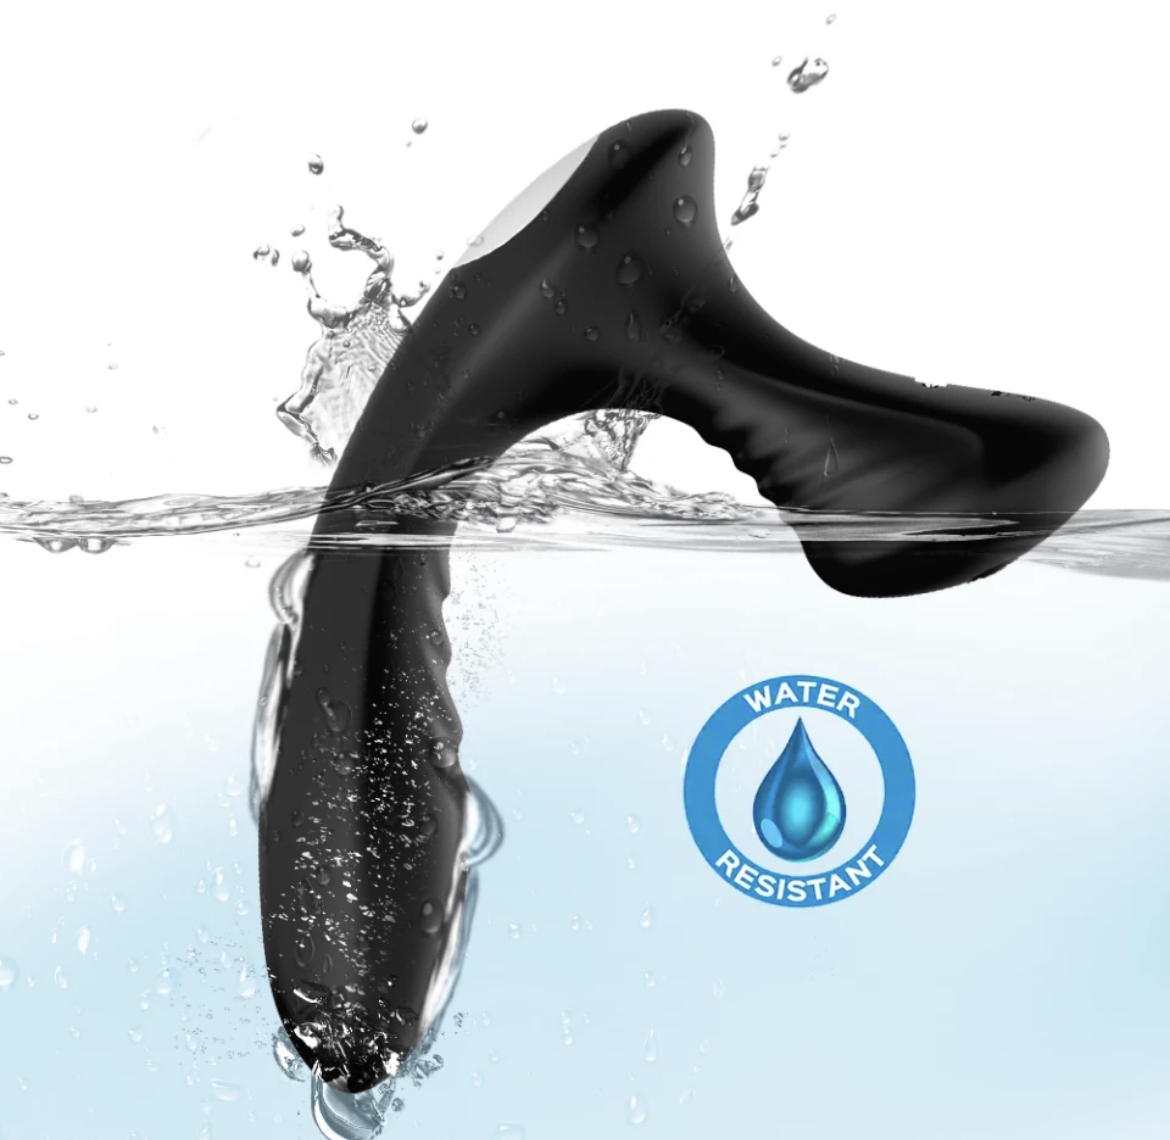 Useeker 9 Modlu Su Geçirmez Şarjlı Titreşimli Anal Vibratör